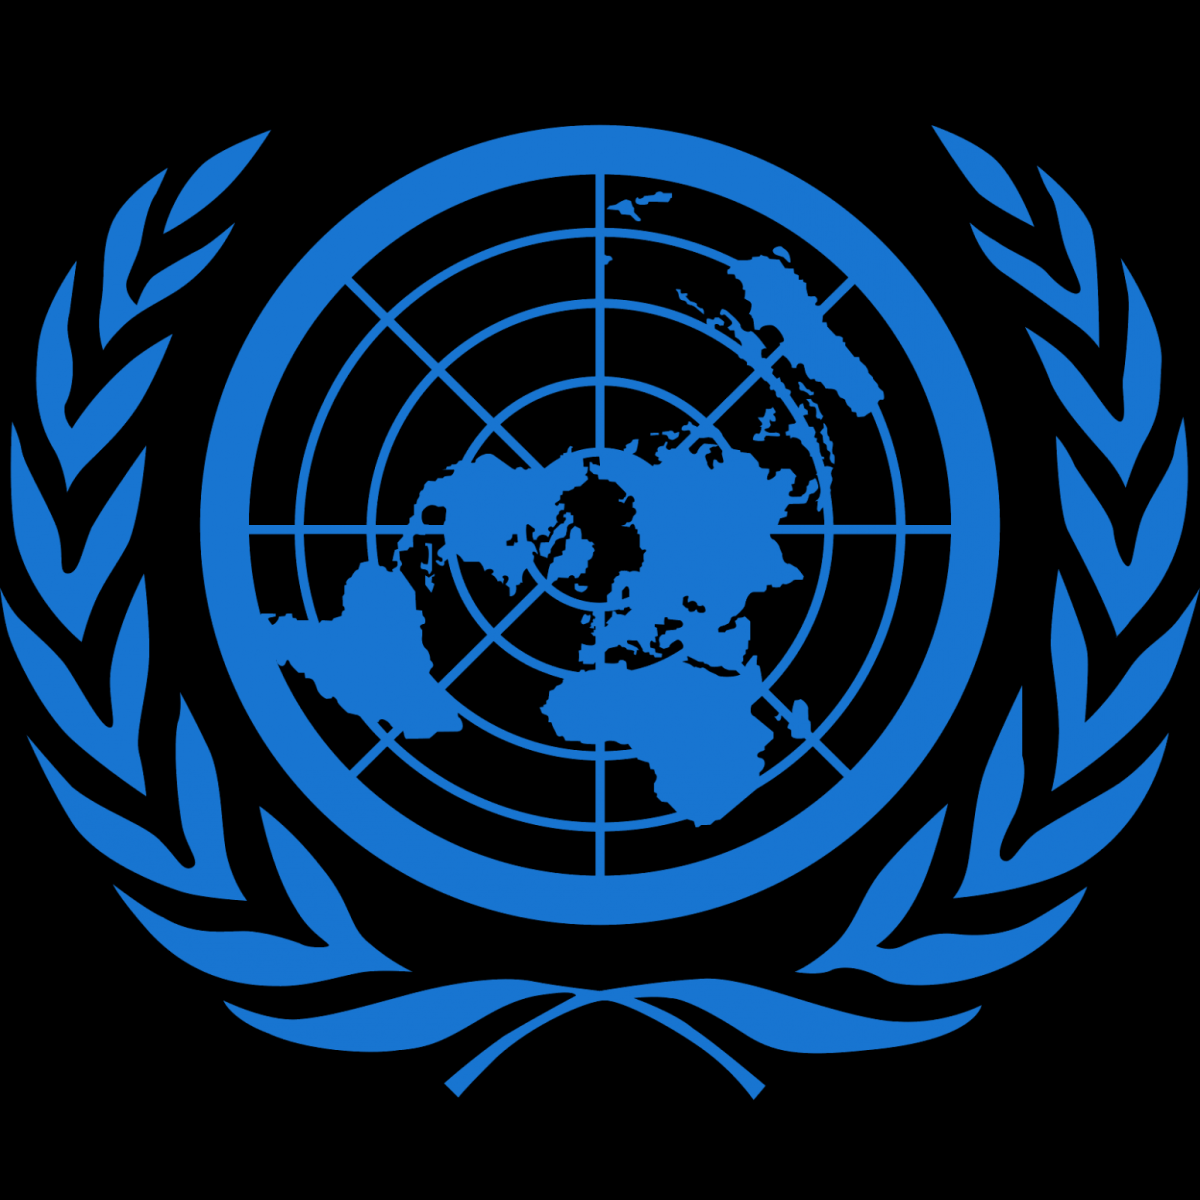 Ркик оон. ООН. Флаг ООН. Значок ООН. Герб ООН.